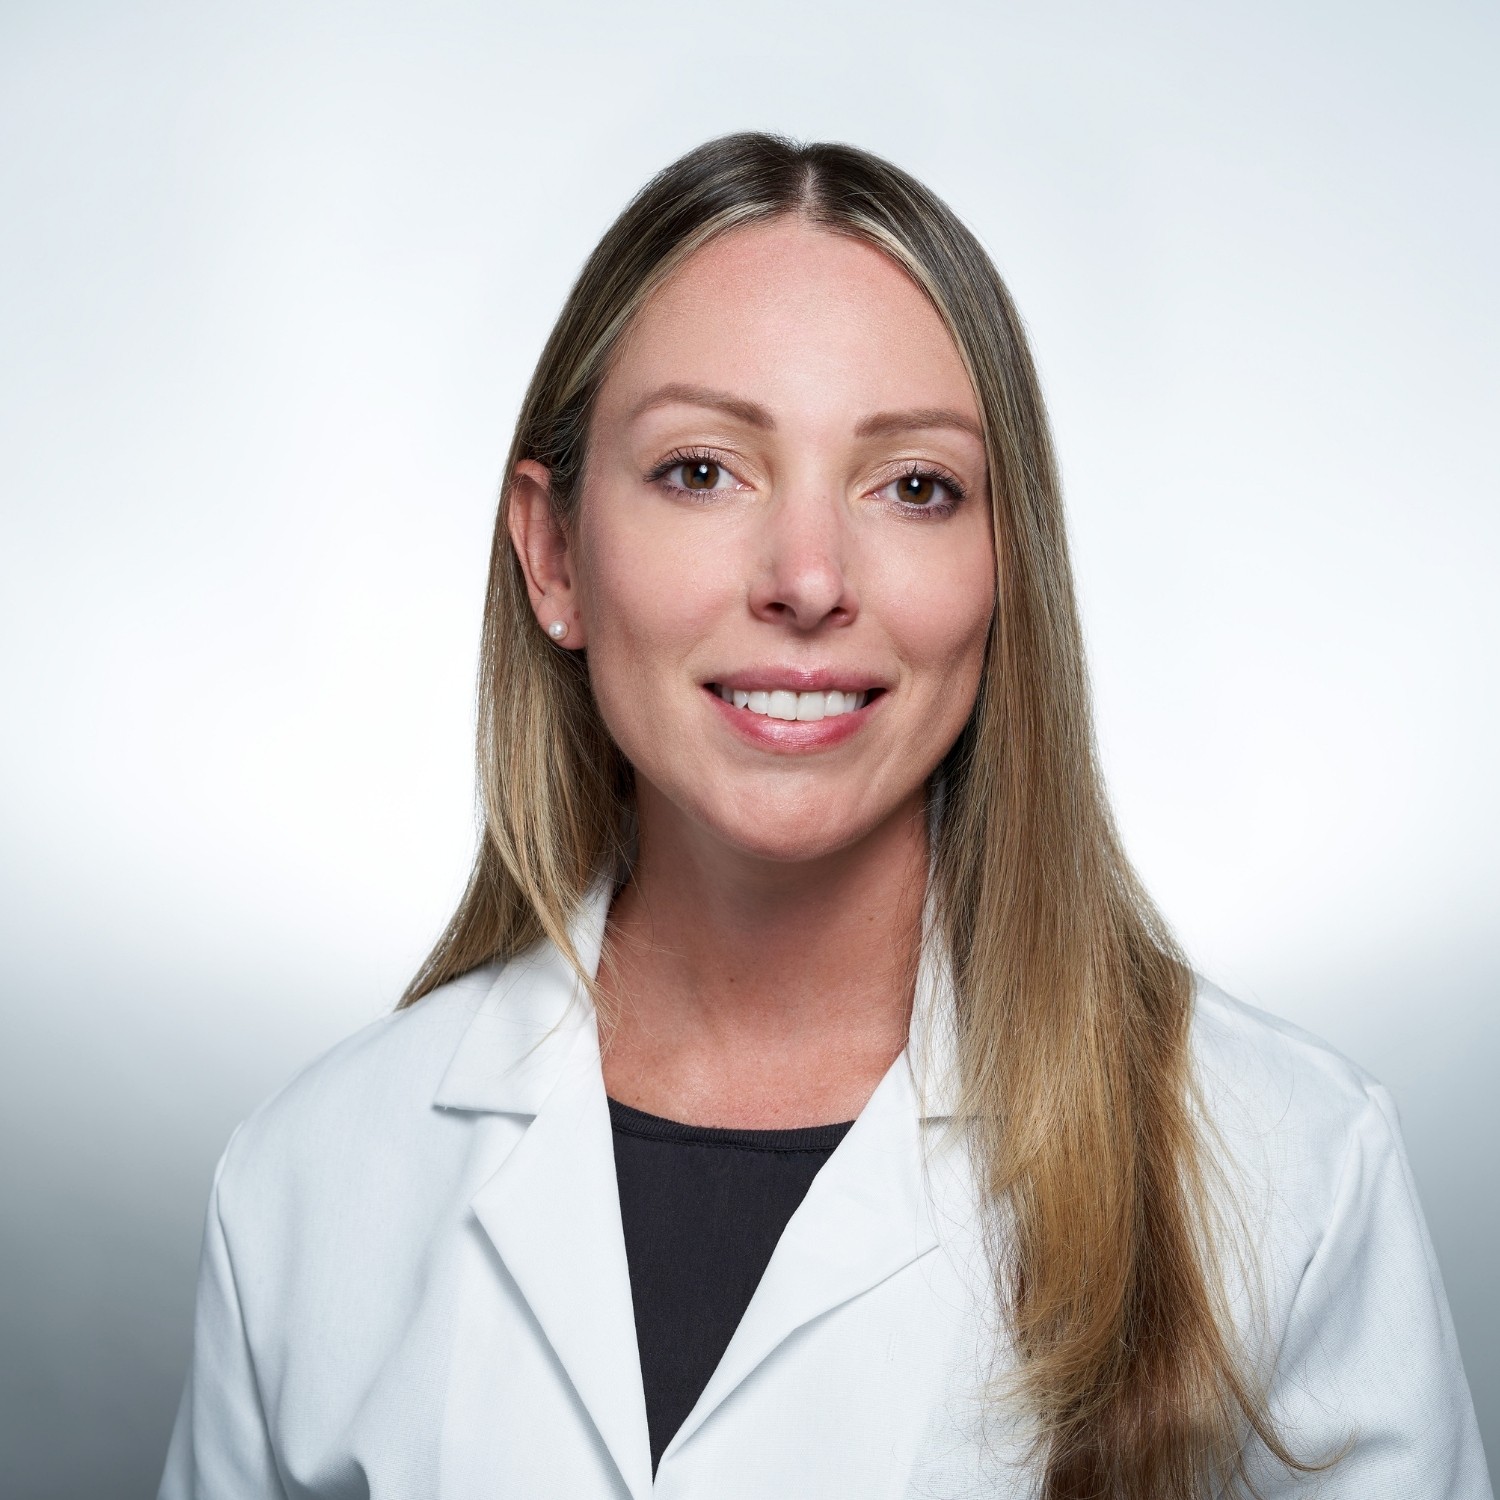 female doctor headshot in white lab coat